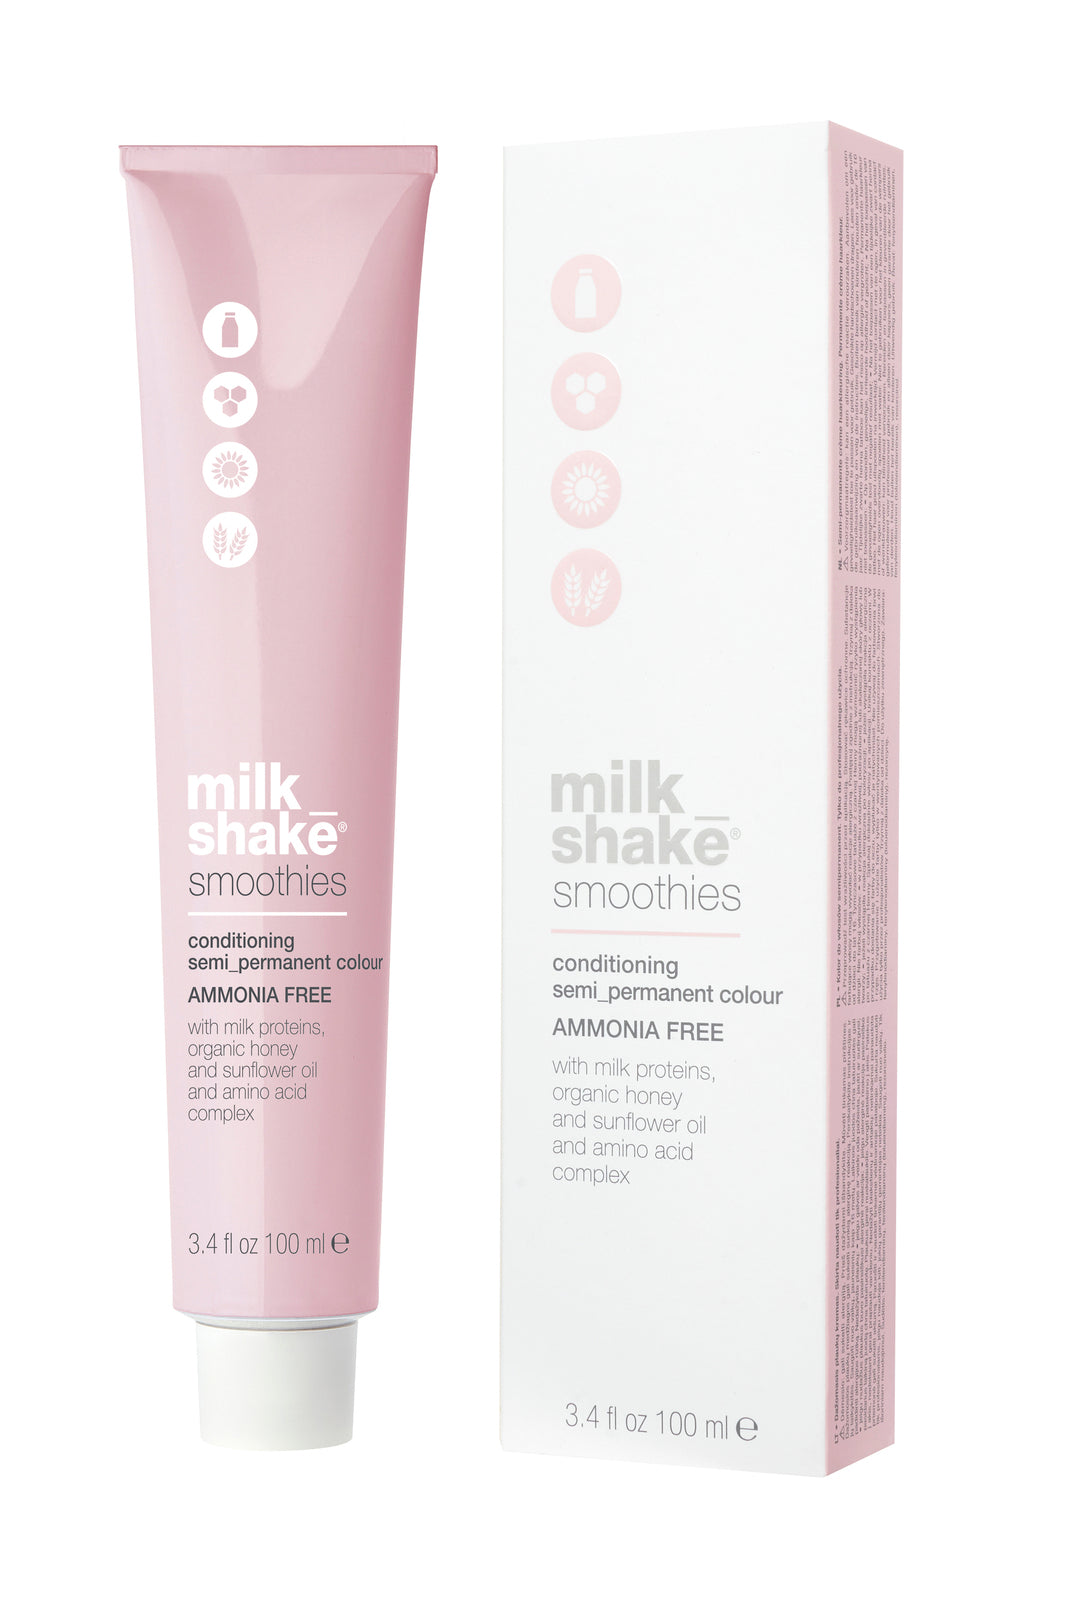 Milkshake smoothies semi-permanent color PEARL